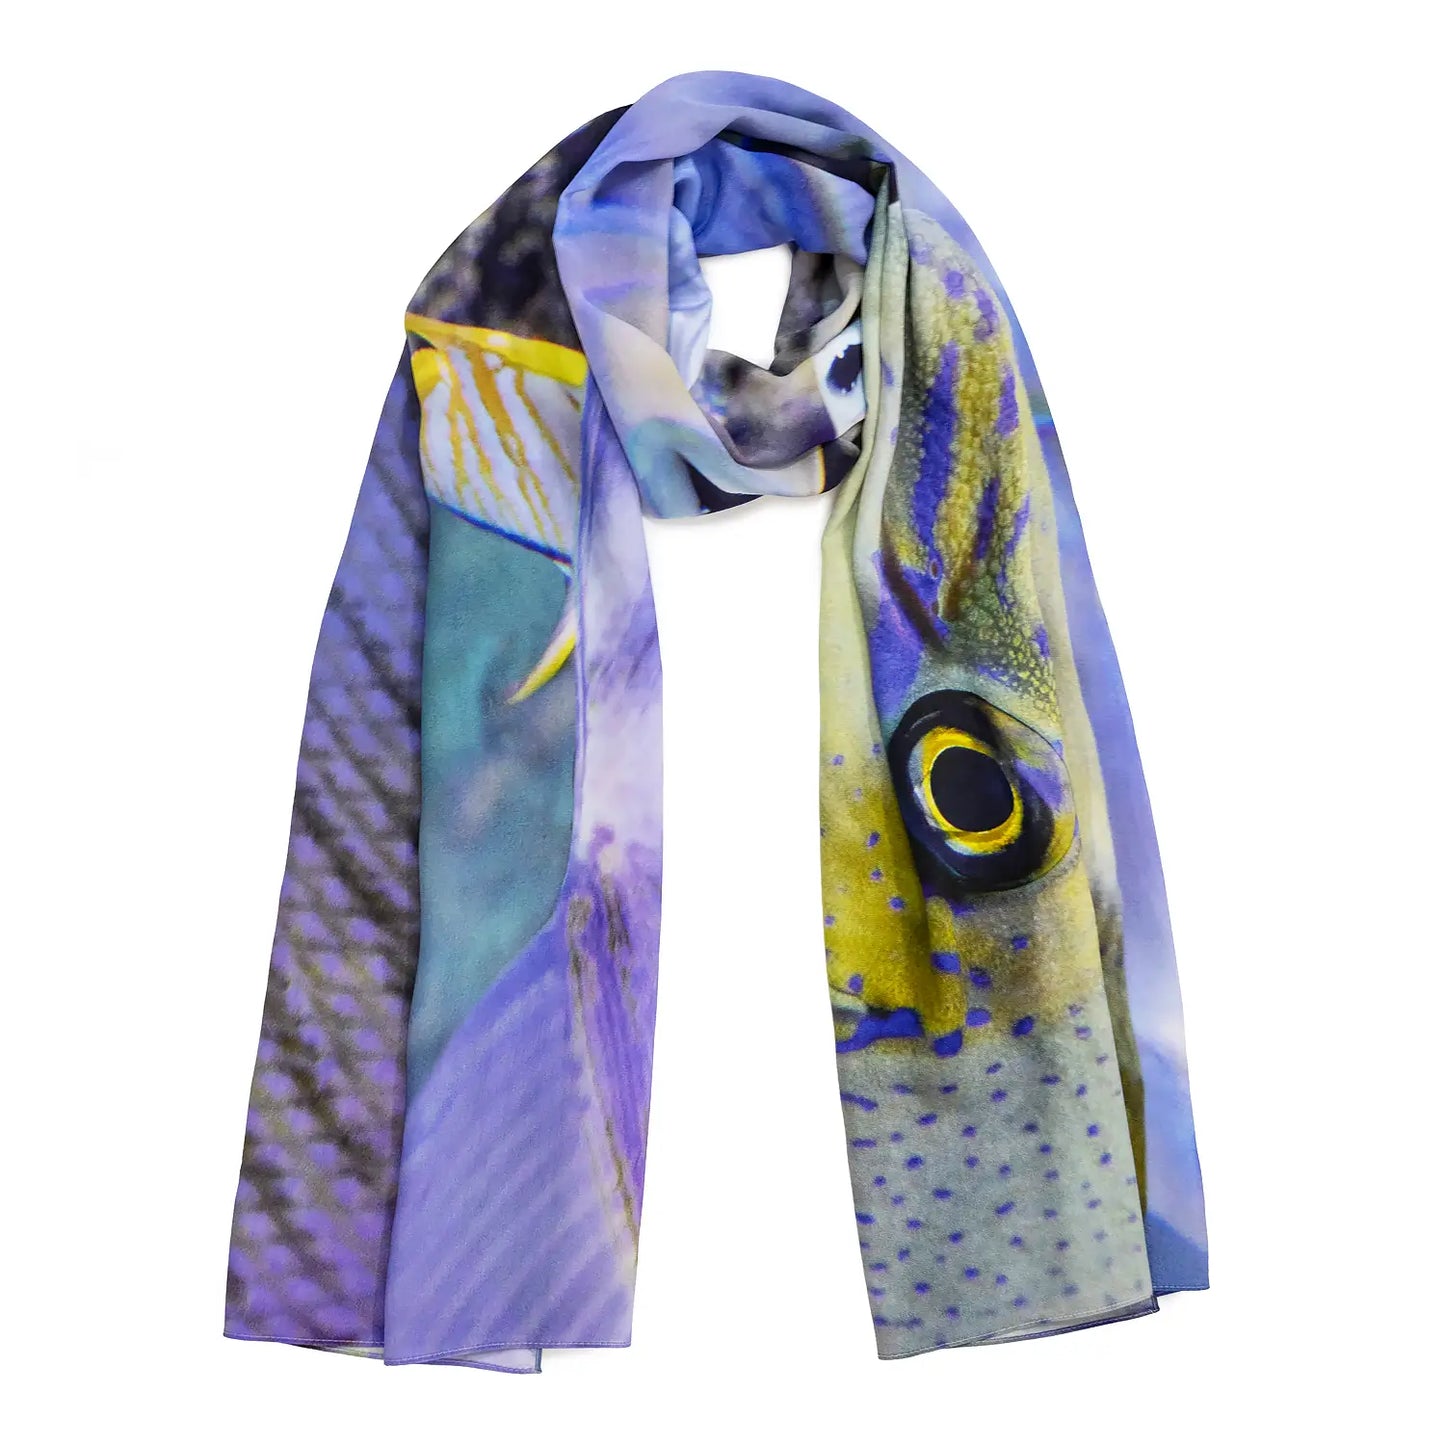 SEA aquarium silk scarf by seahorse silks